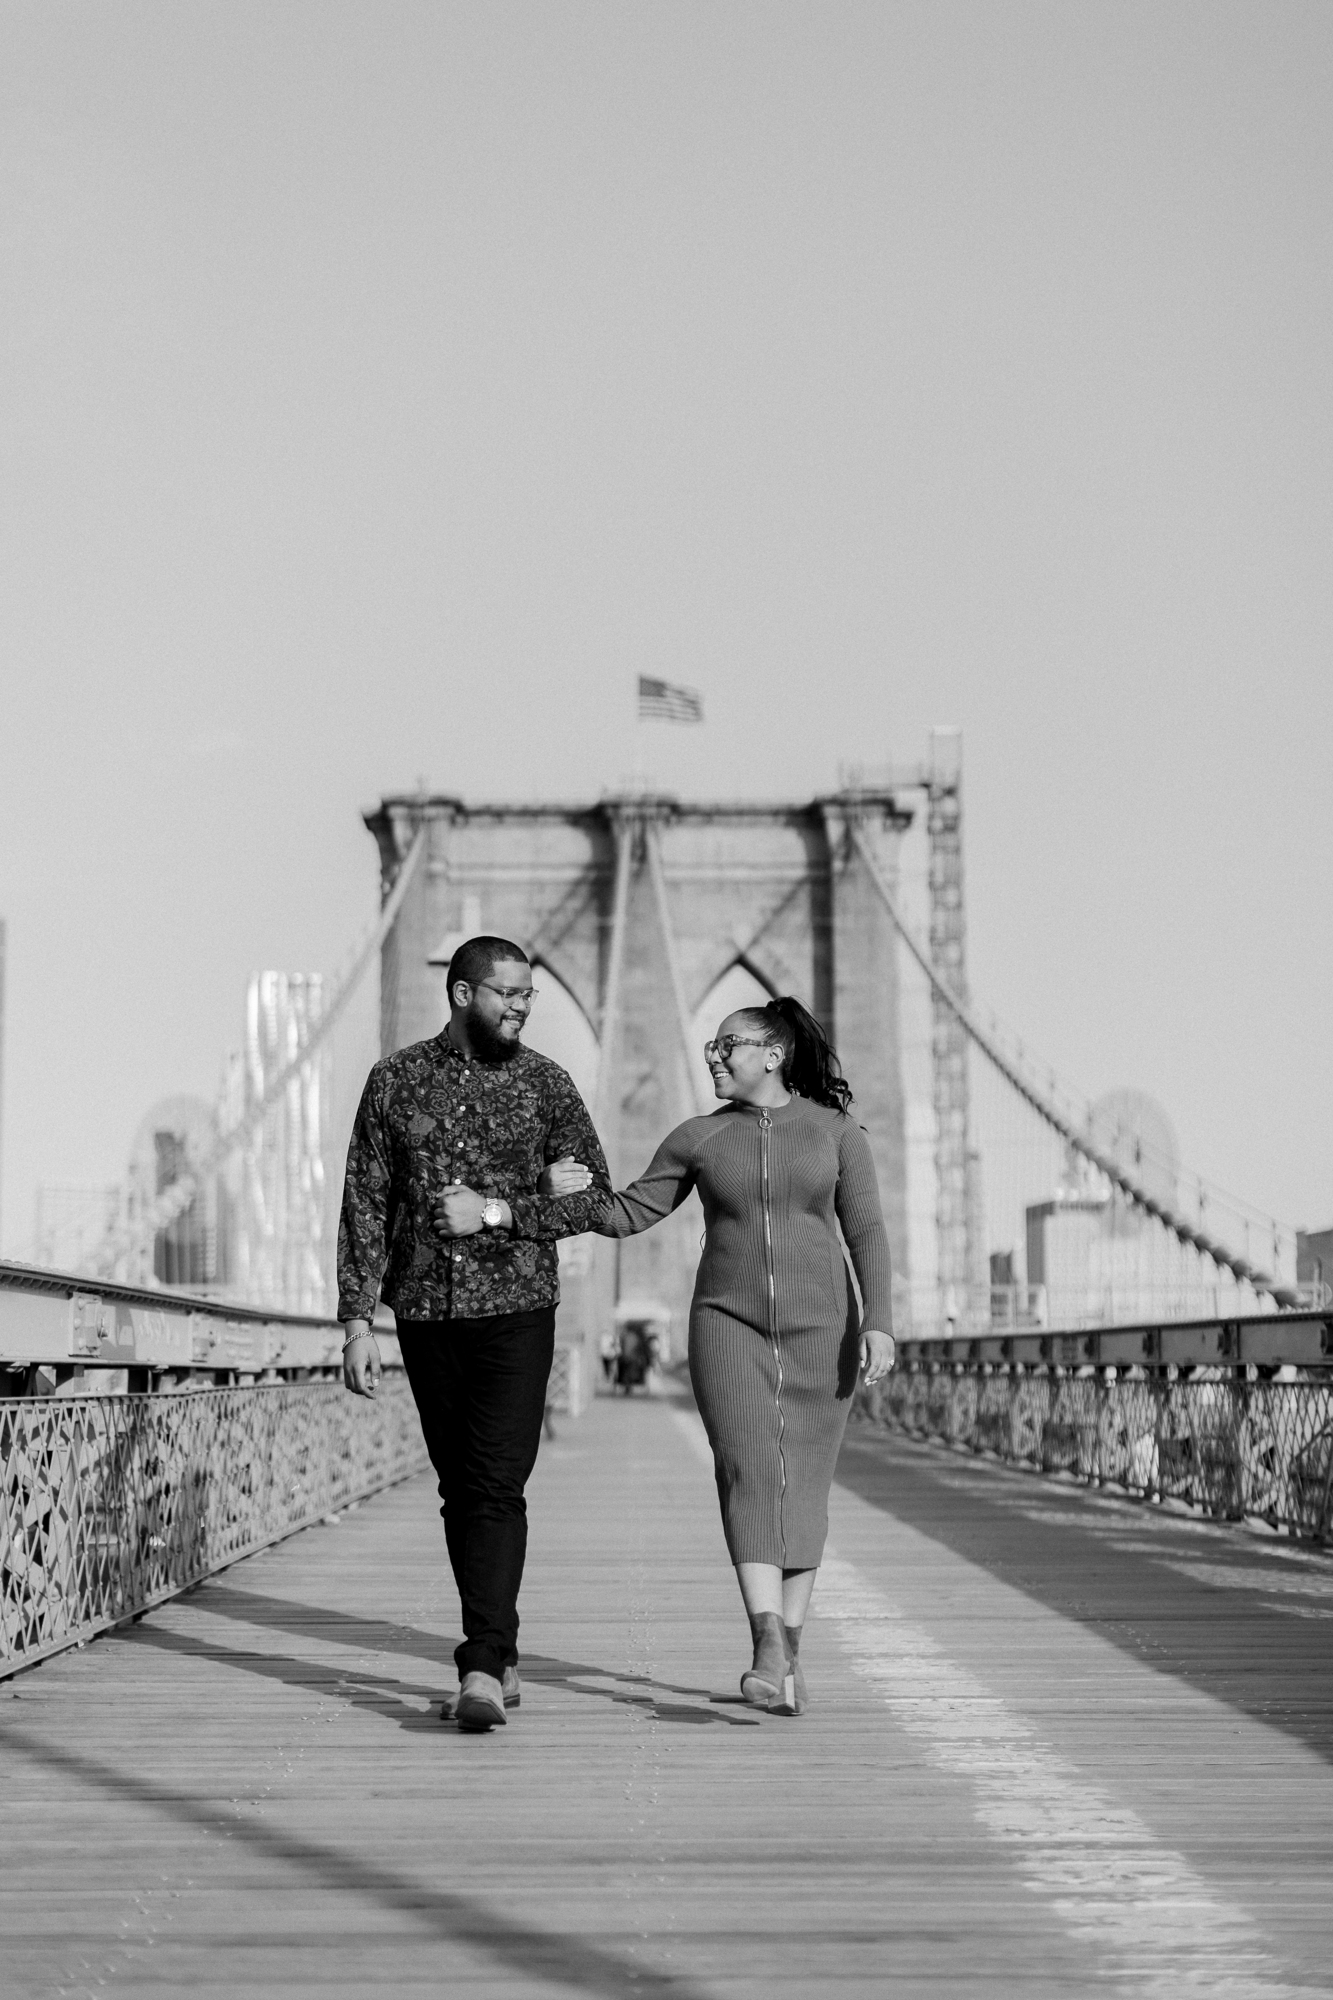 Dazzling Autumn DUMBO Engagement Photography at the Brooklyn Bridge